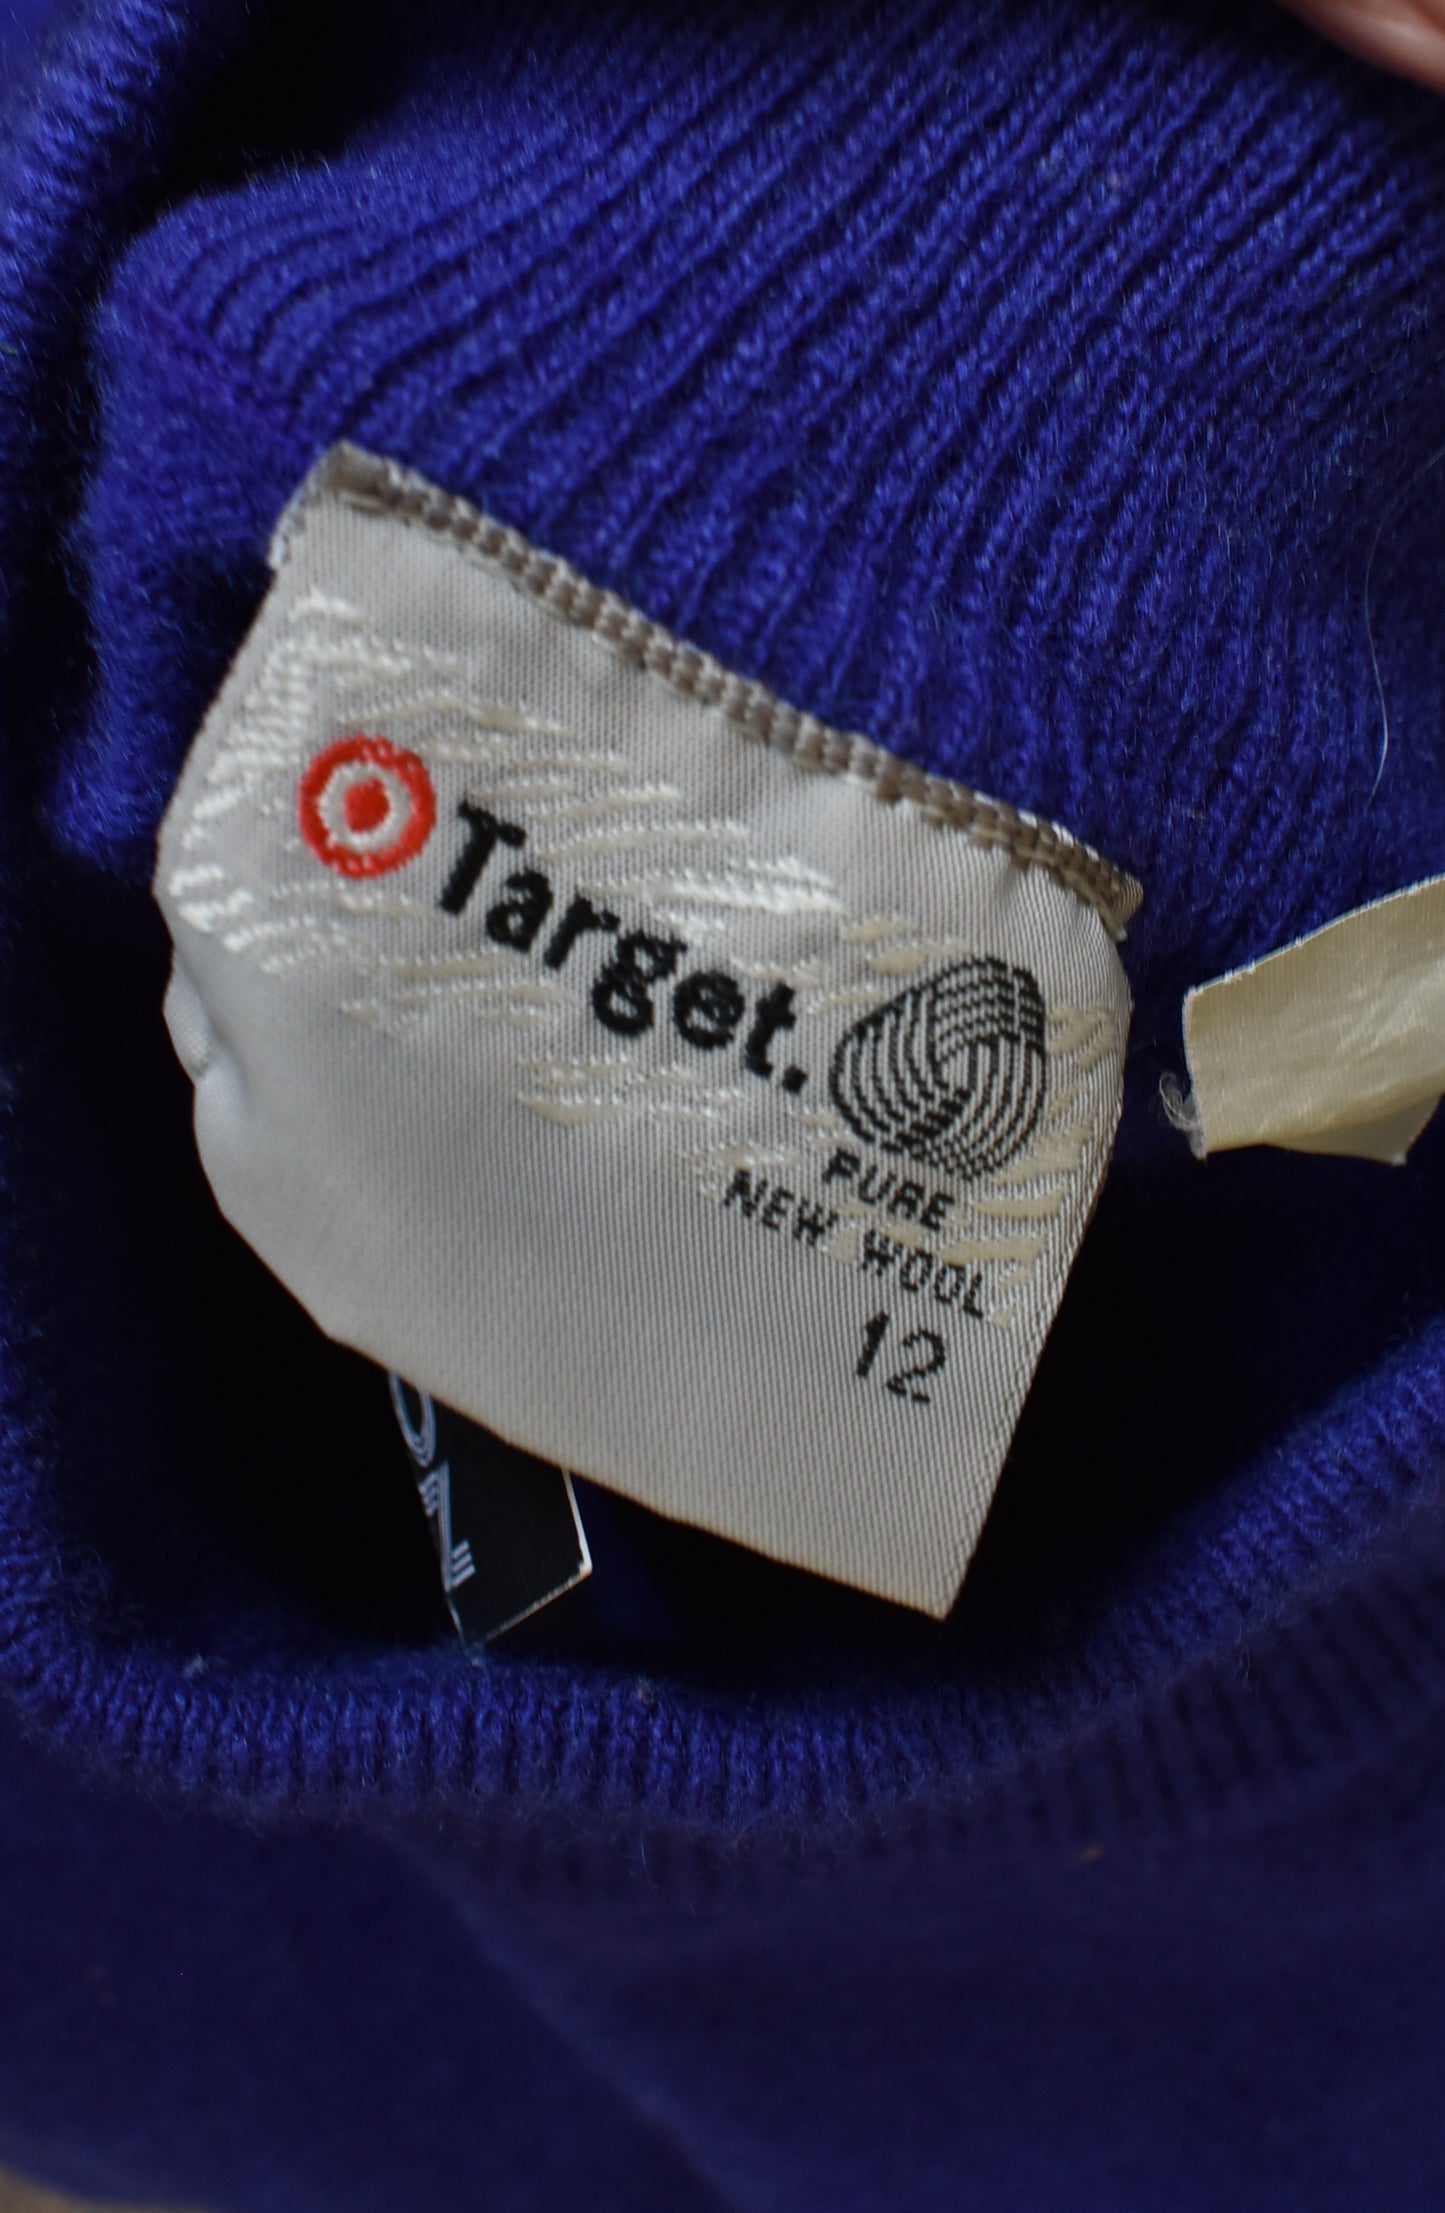 Target purple lambswool sweater, size 12